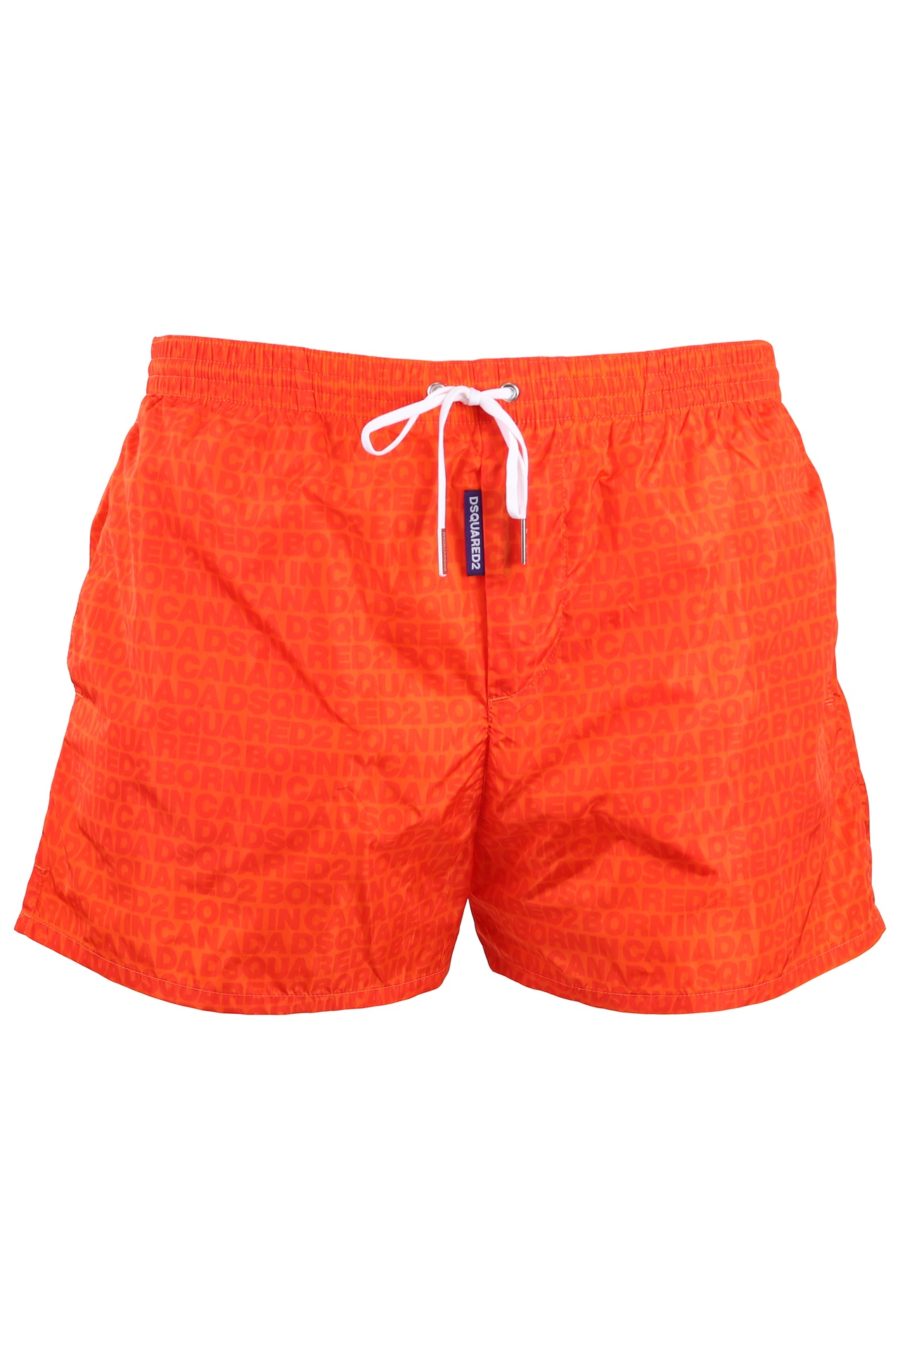 Swimming costume Dsquared2 orange logo - d4b98b6970a60e5683aa5d99d412bb0064d240e5